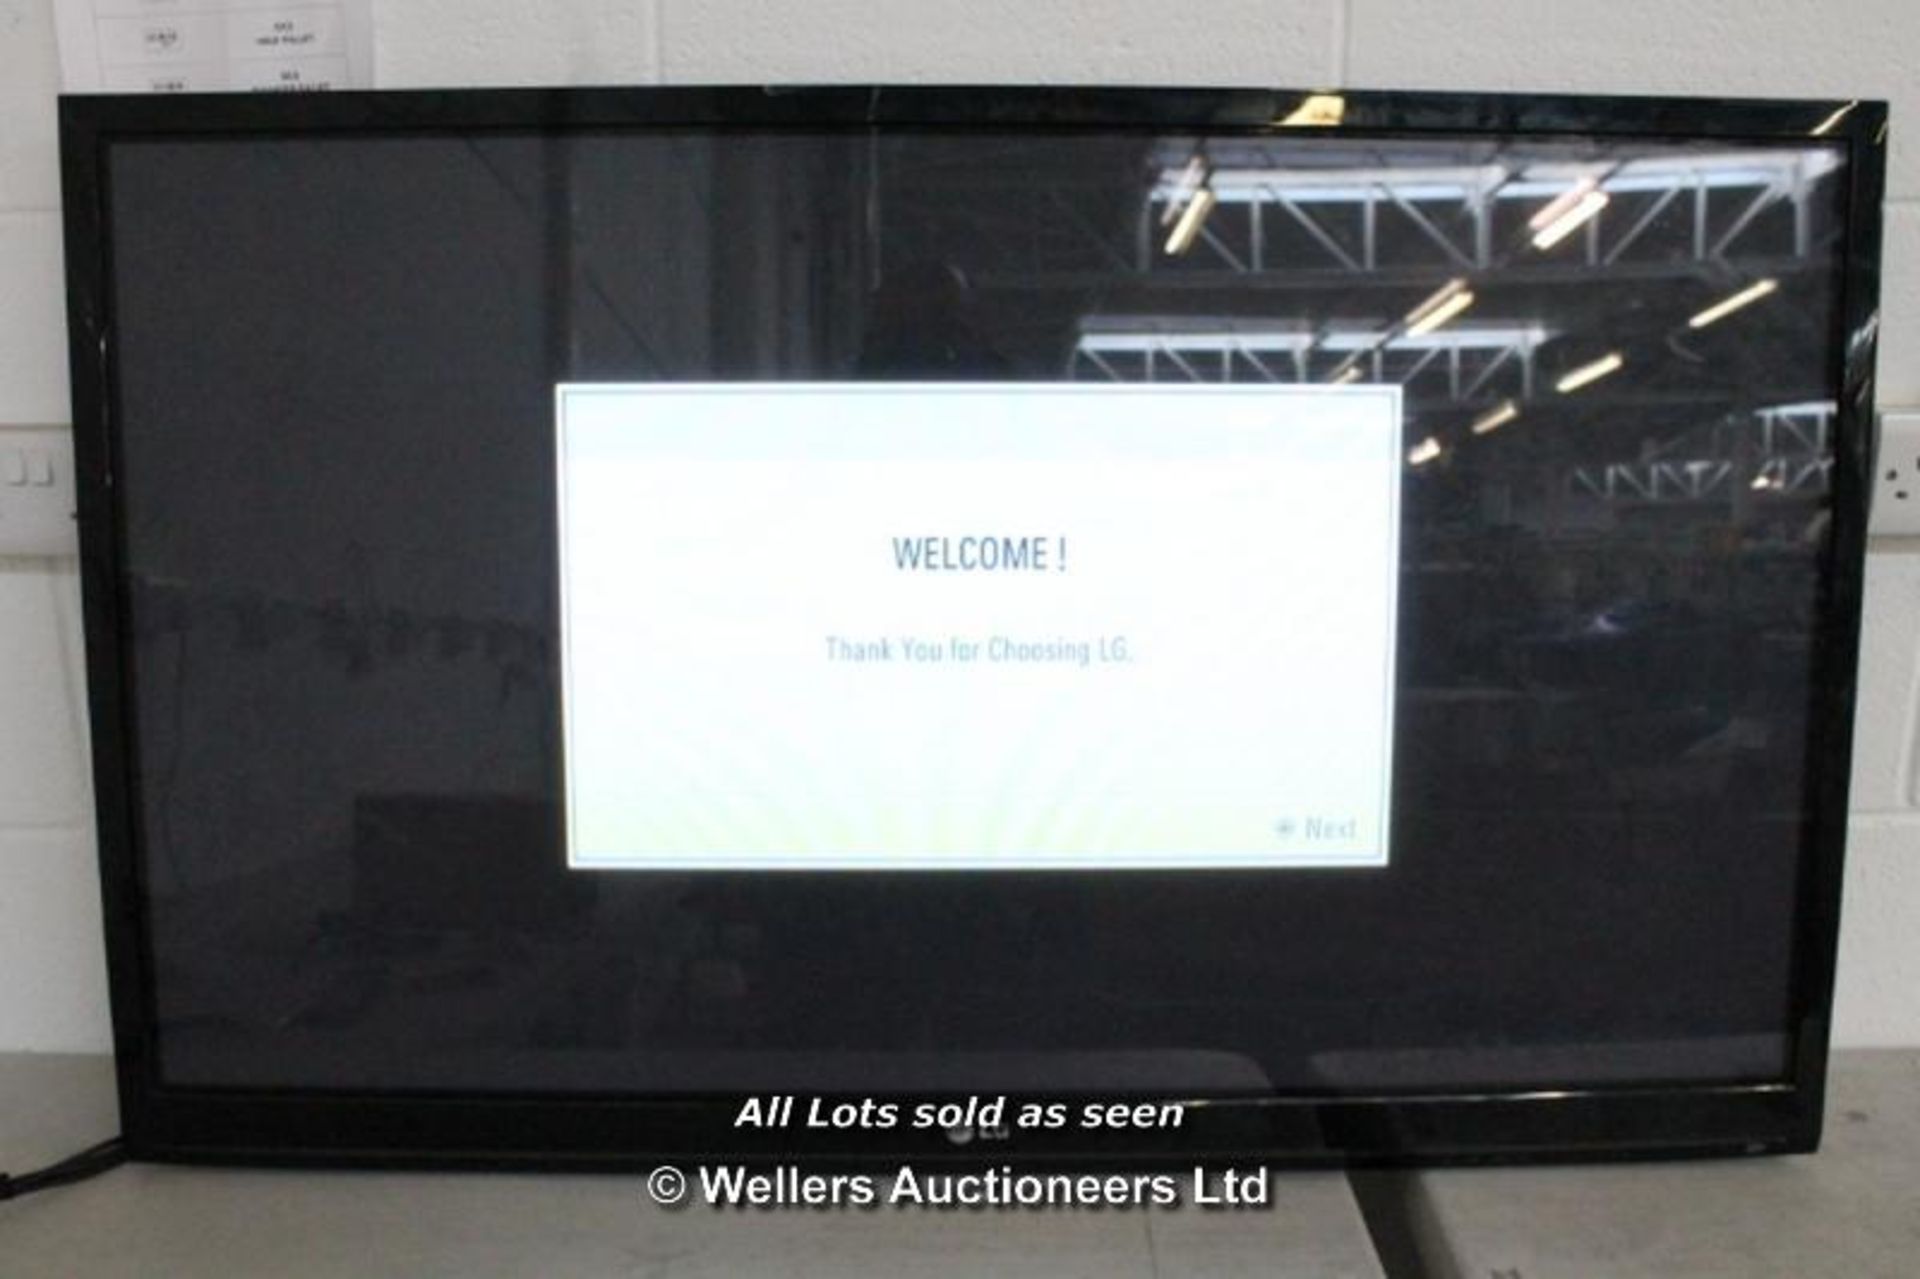 LG 50PK350 50" HD PLASMA TV WITH FREEVIEW / GRADE: REFURBISHED (TV4) [B1] - Image 2 of 2